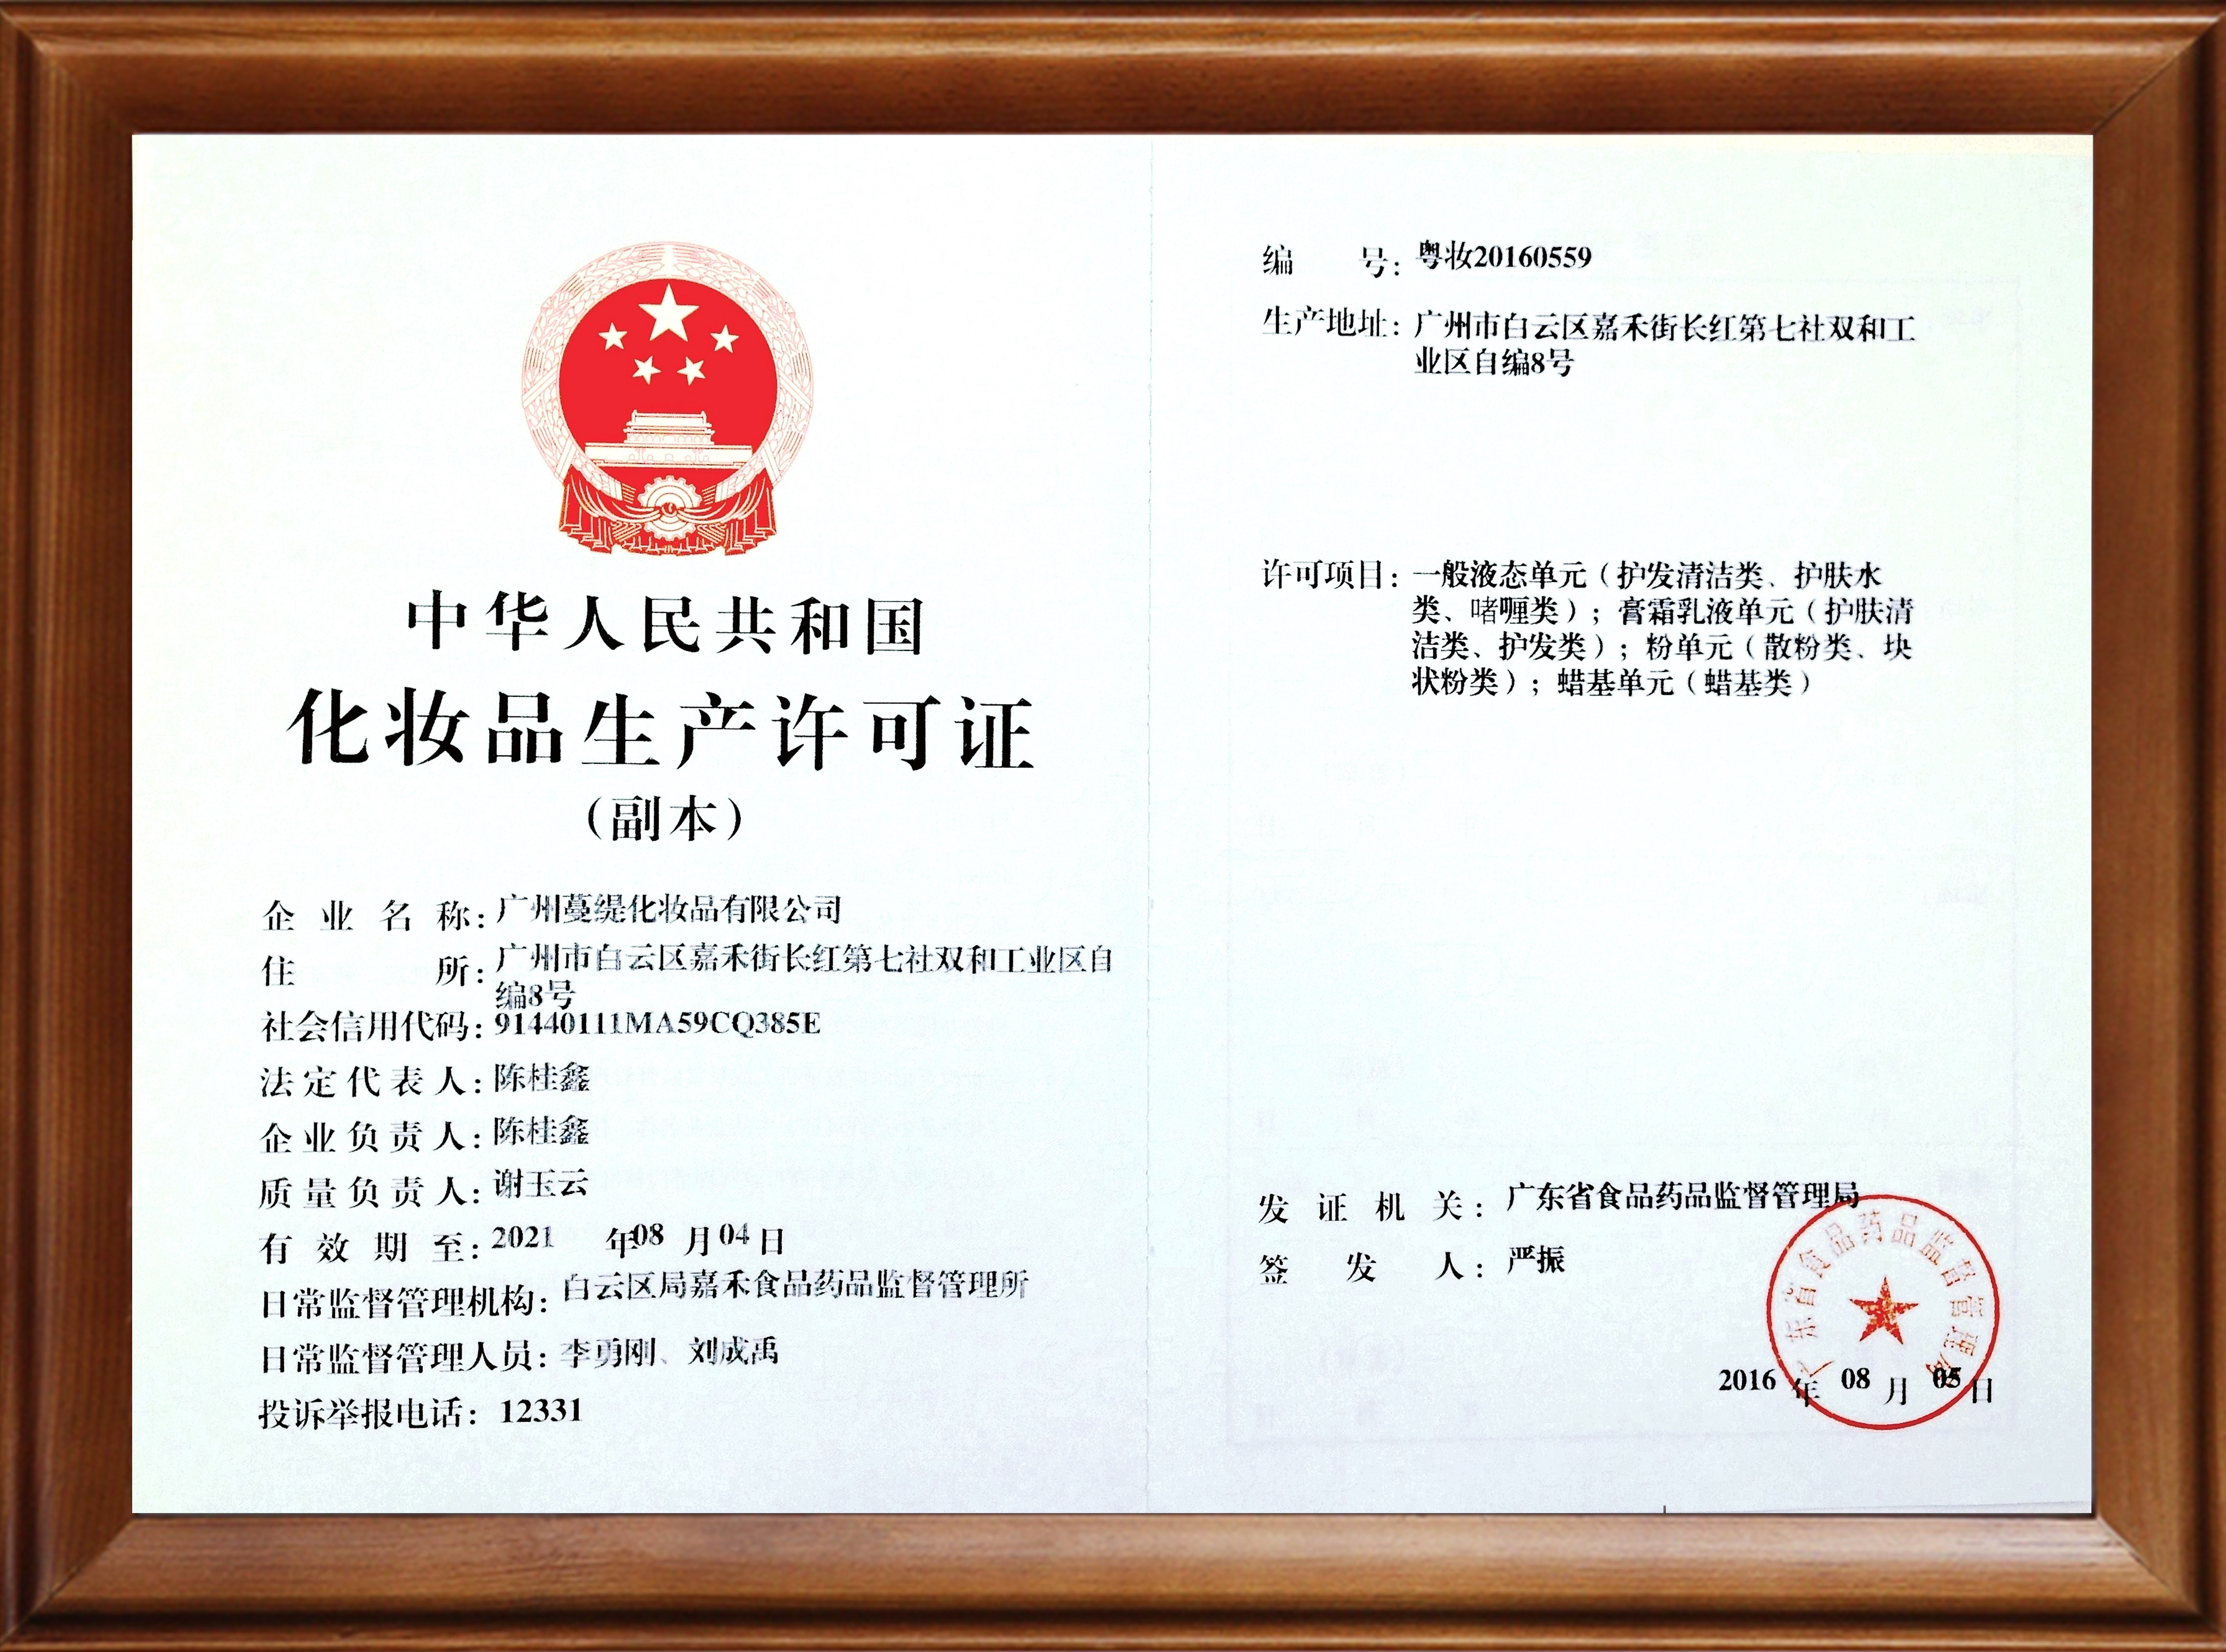 Production license of Beauty key cosmetics